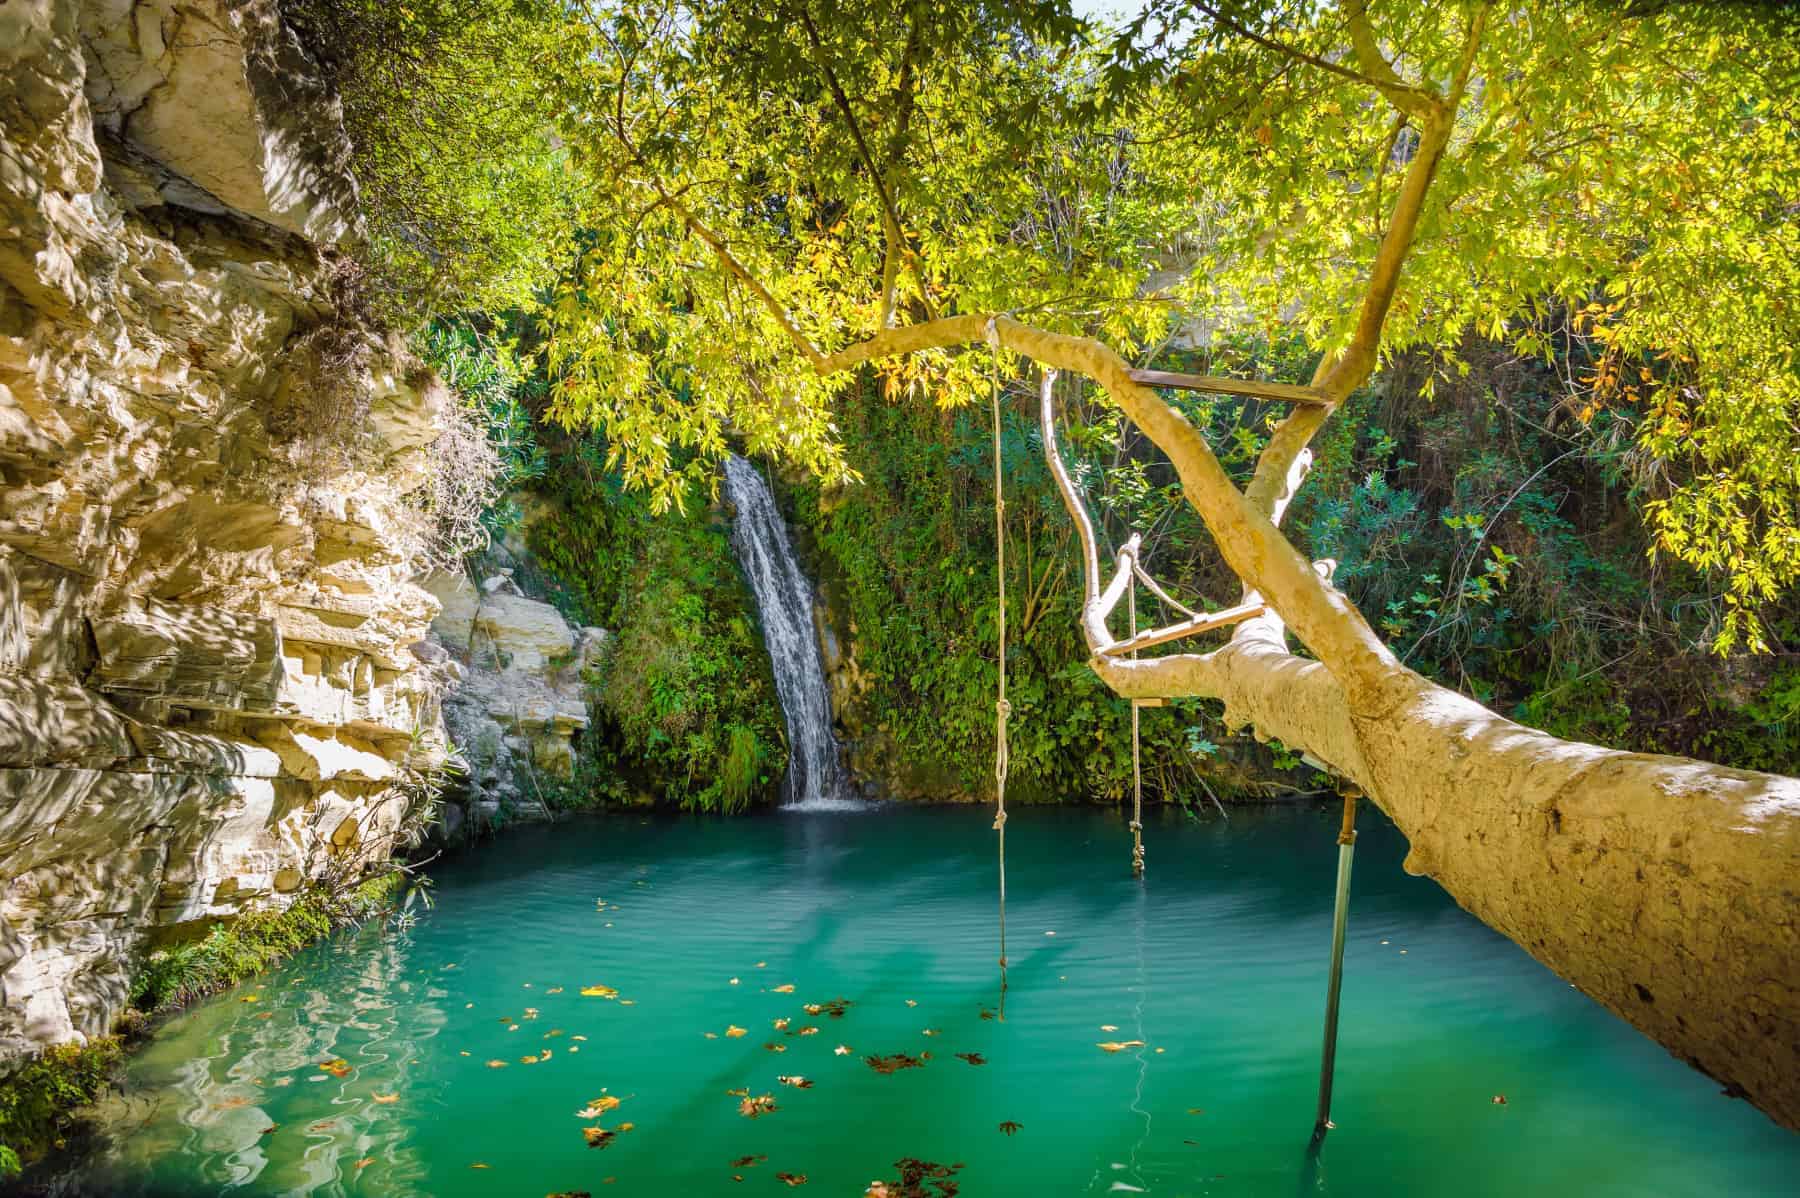 Adonis Baths, the famous showplace for tourists near Paphos, Cyprus.